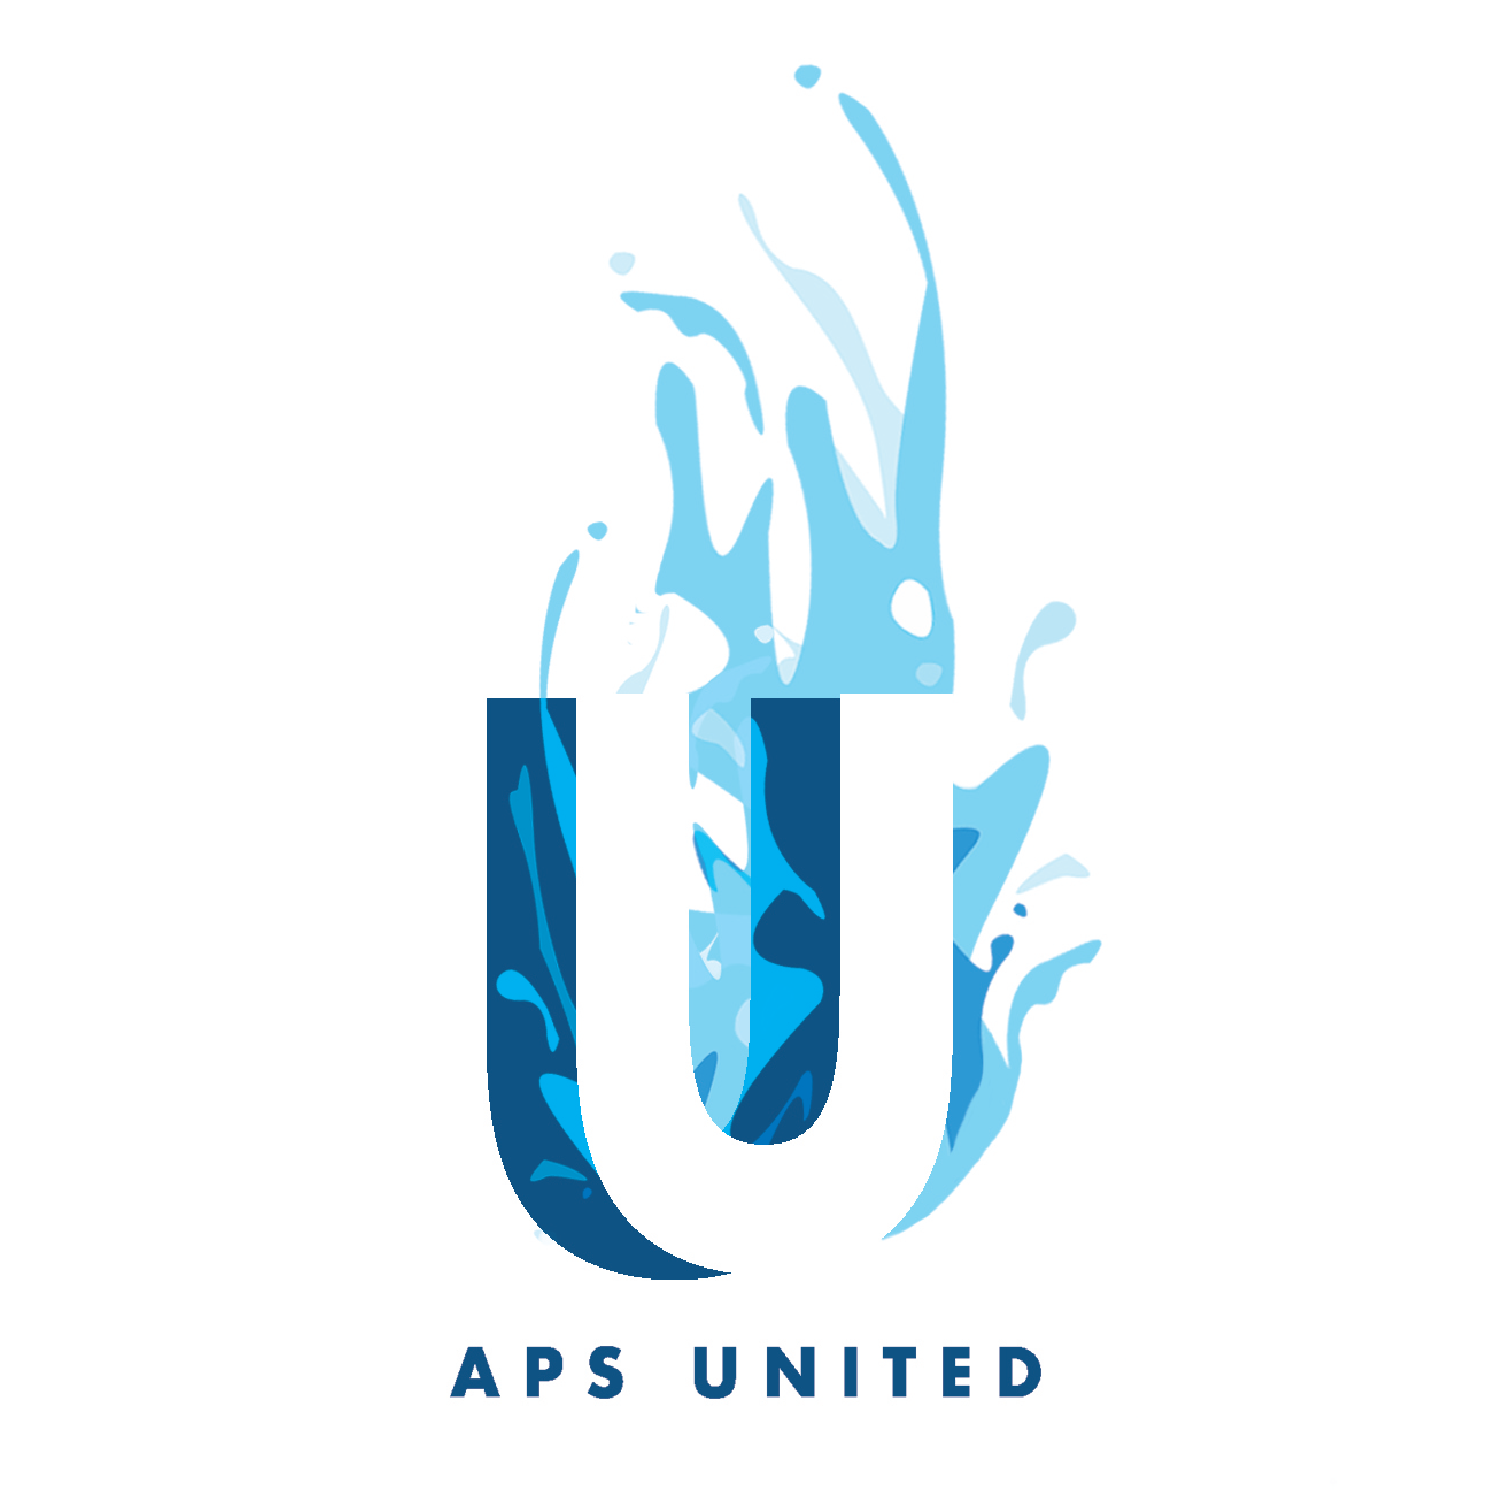 aps united-01.png